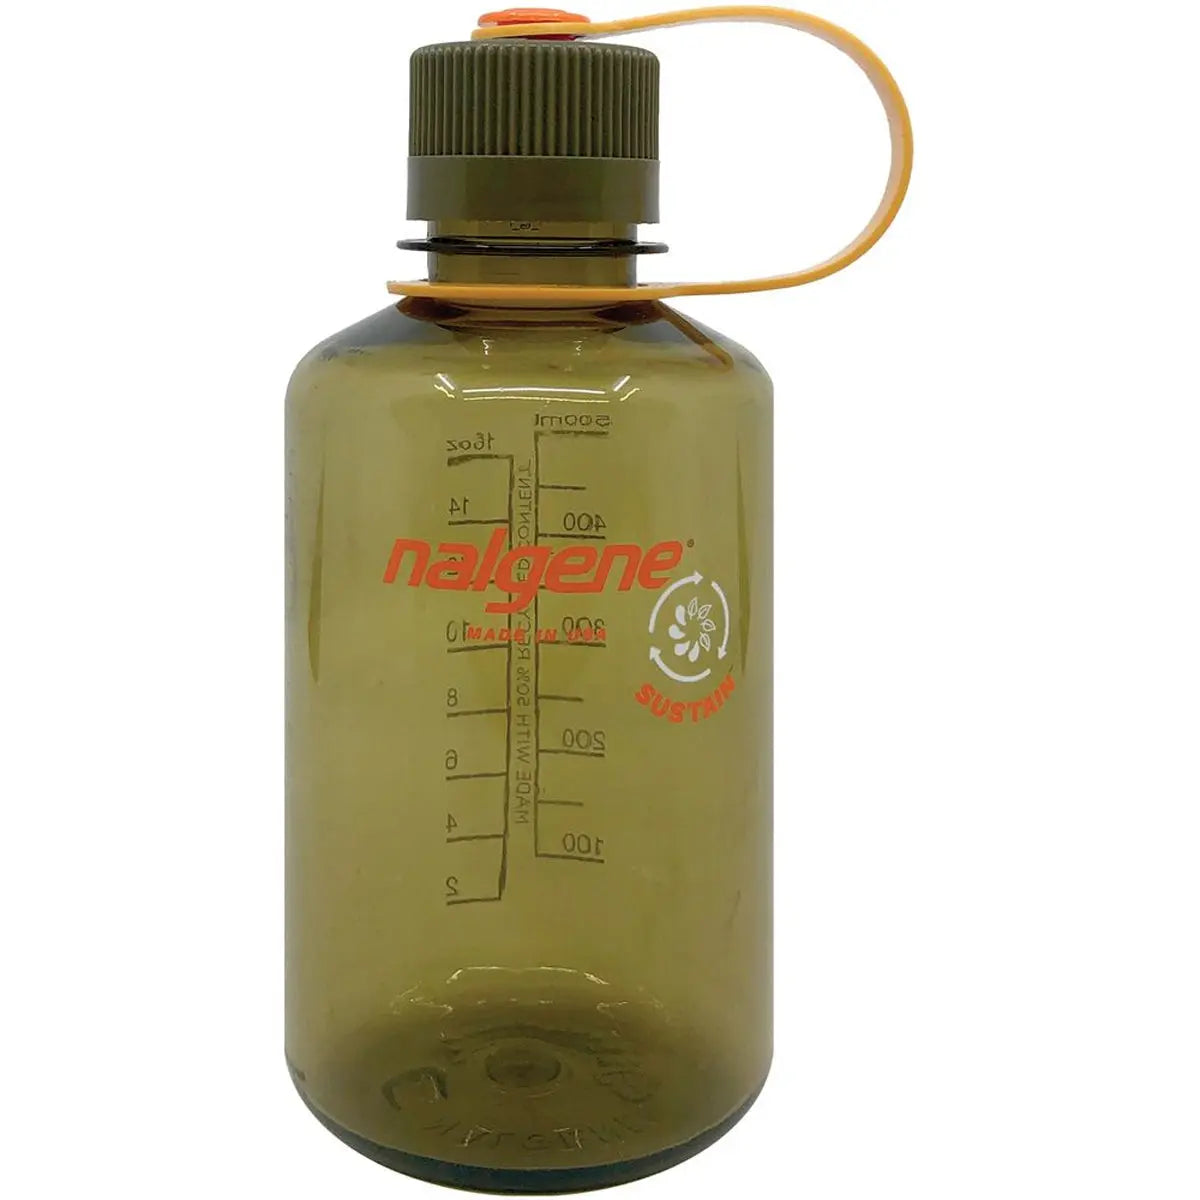 Nalgene Sustain 16 oz. Narrow Mouth Water Bottle Nalgene